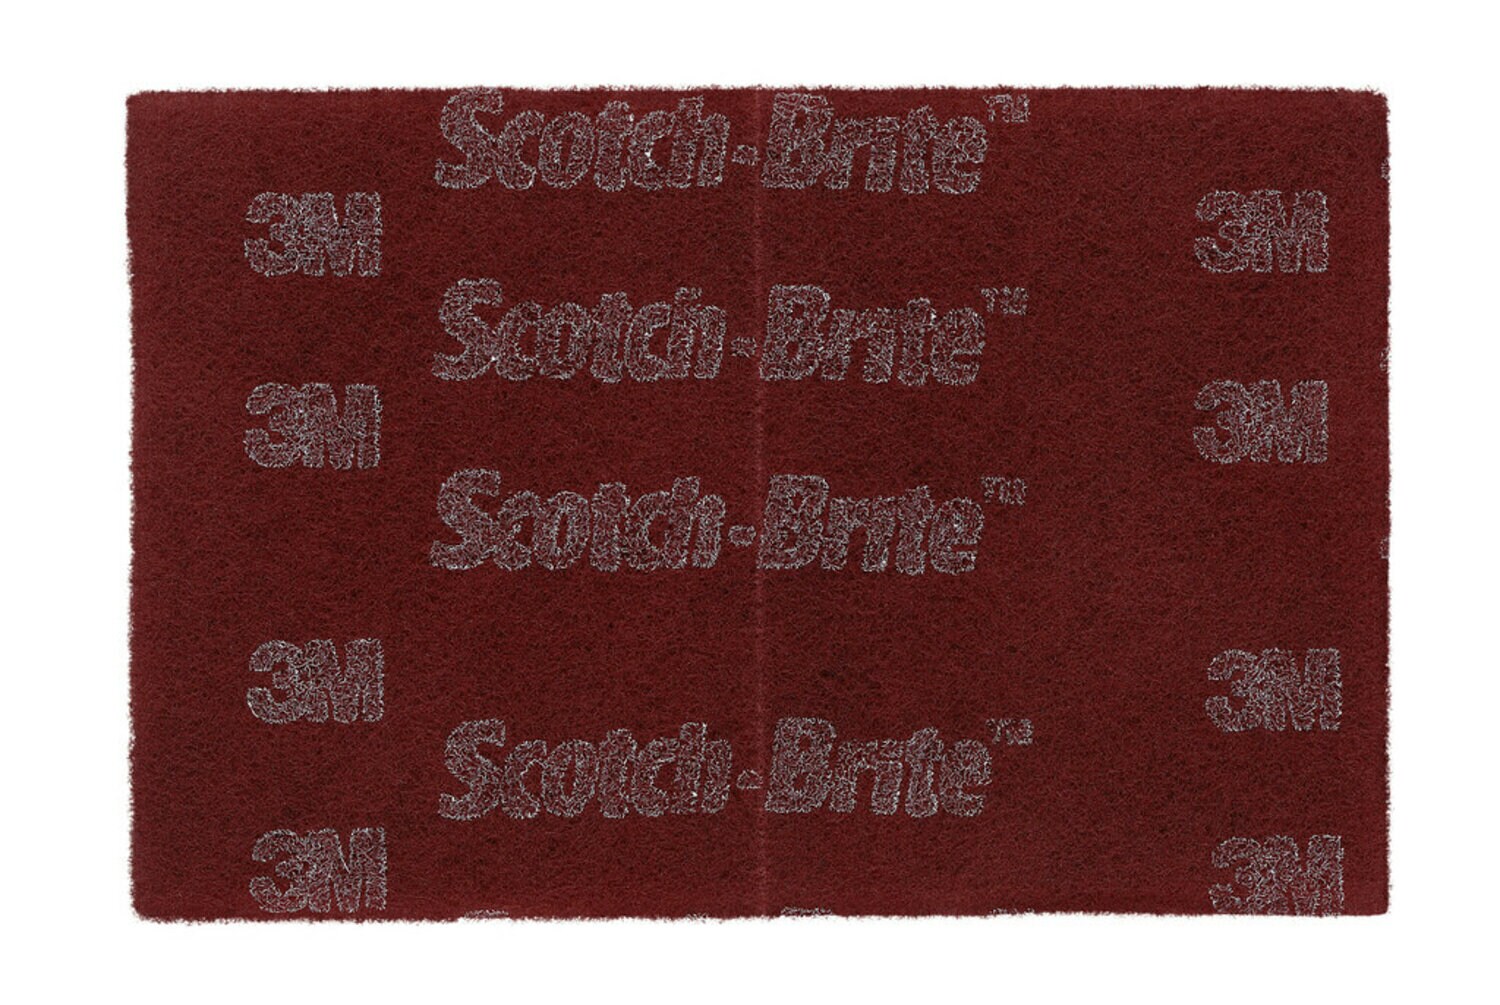 7100066382 - Scotch-Brite General Purpose Hand Pad, 7447, A/O Very Fine, 6 in x 9in,
SPR, 20/Carton, 60 ea/Case